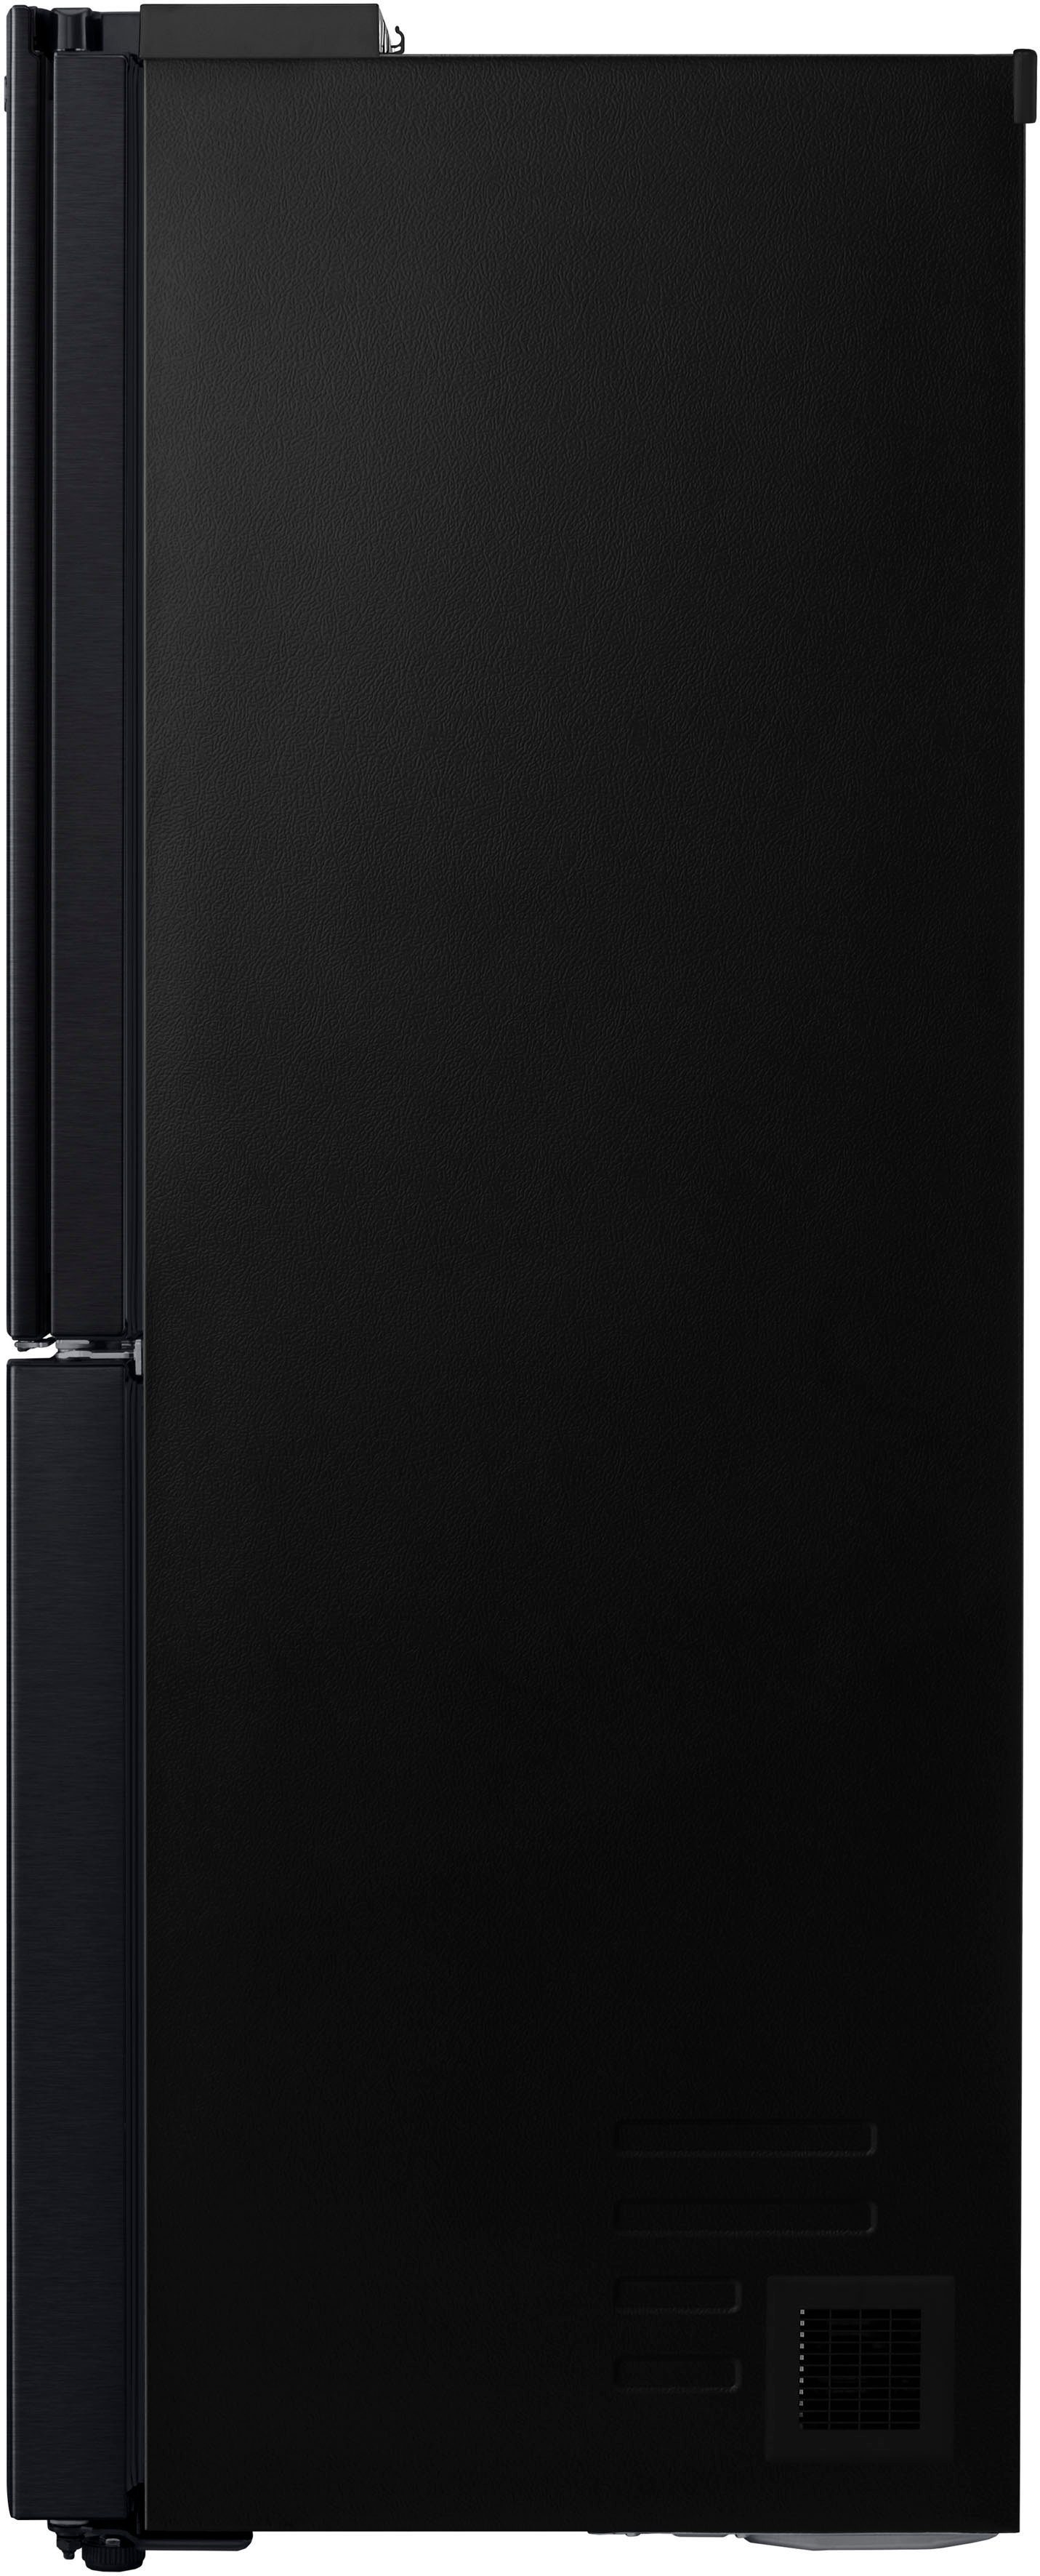 LG Multi Door GMX945MC9F, 179,3 cm breit hoch, 91,2 cm